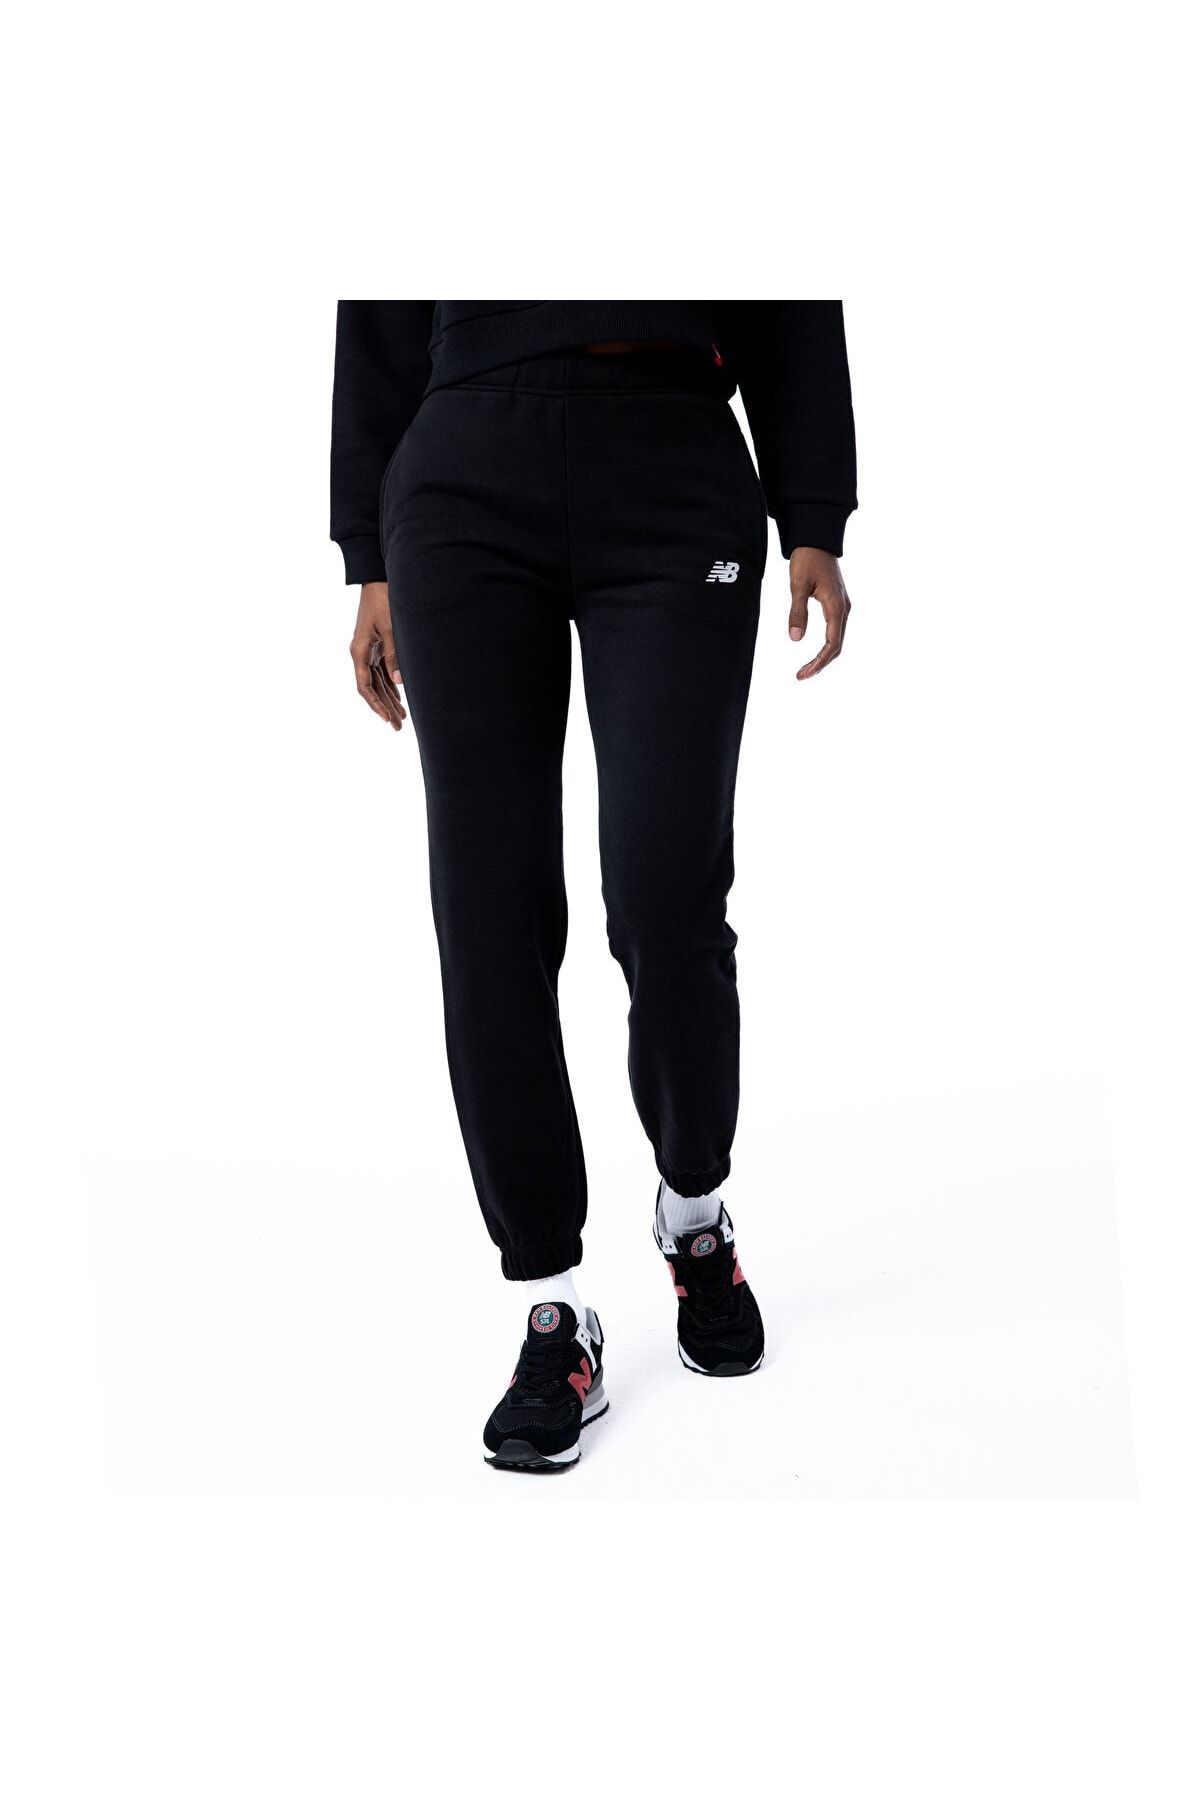 New Balance Wnp3209 Lifestyle Pants Siyah Kadın Eşofman Altı